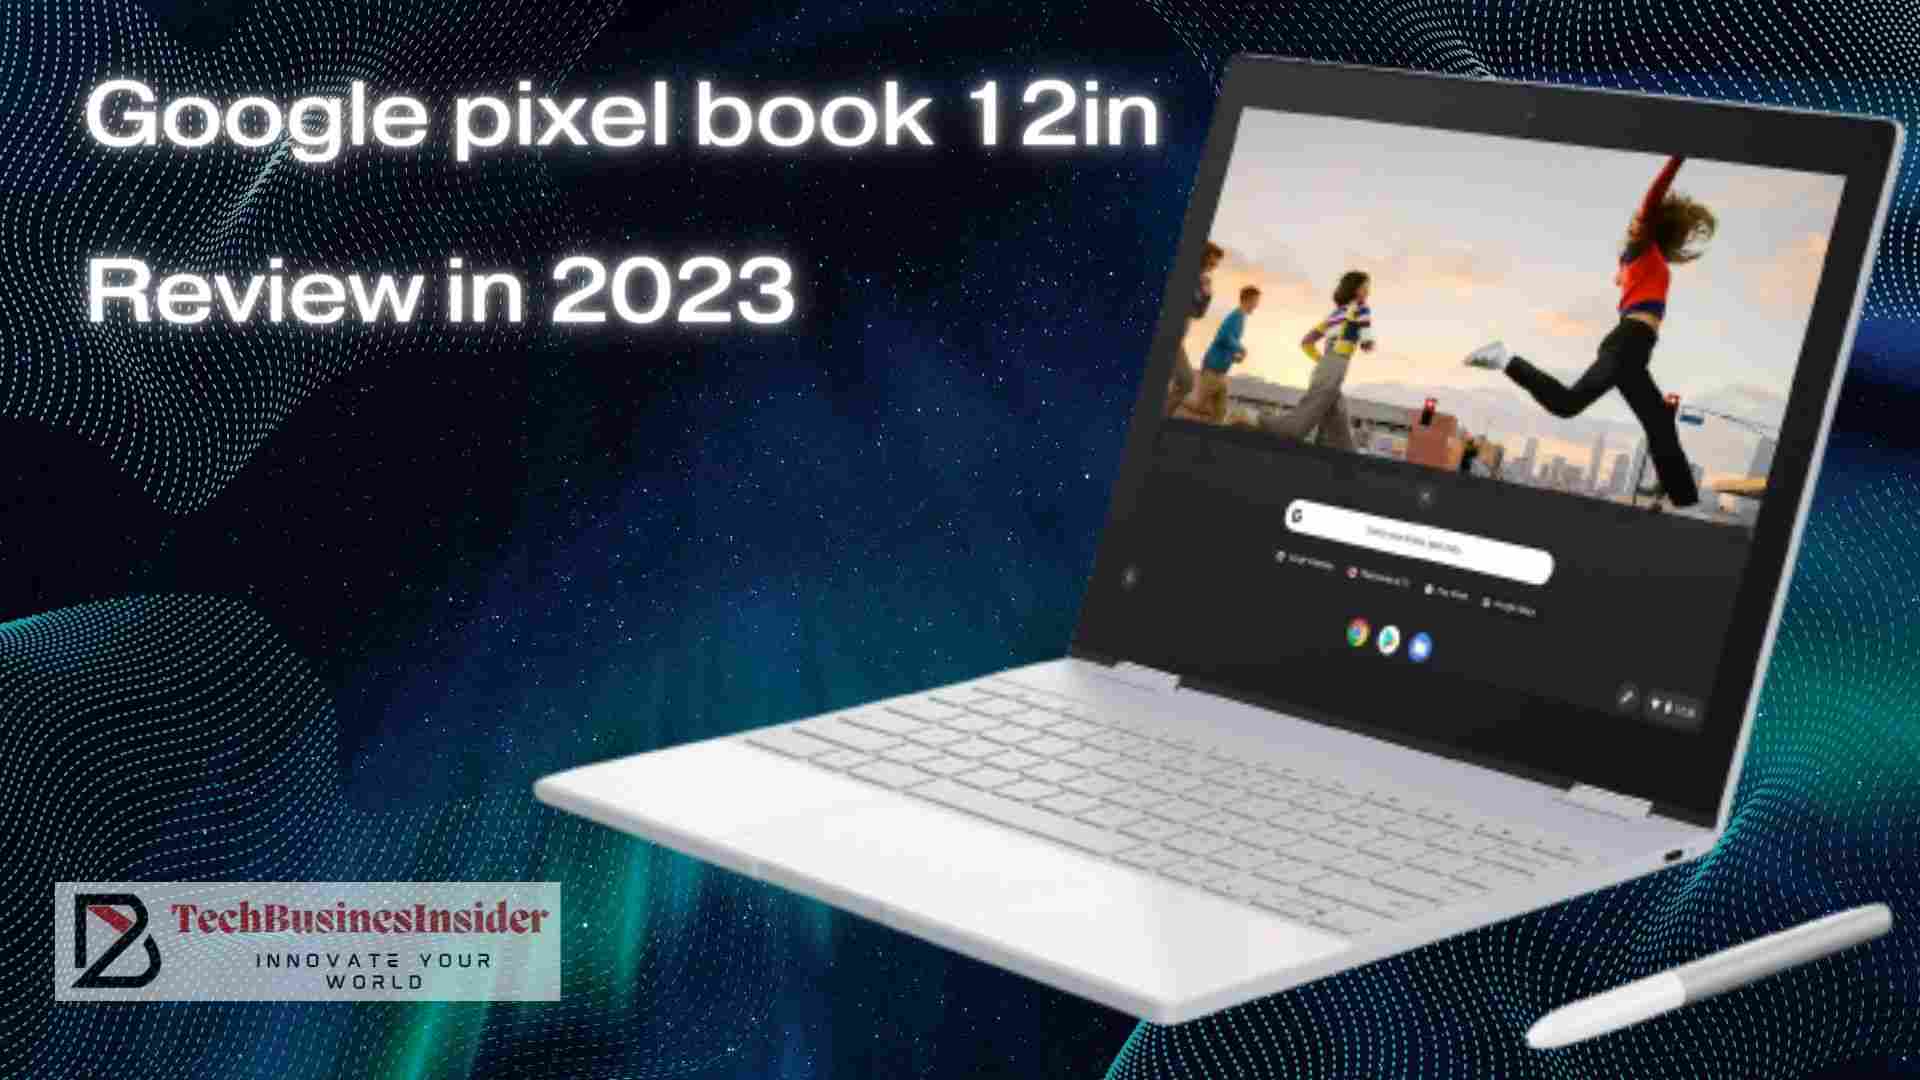 Google Pixel book 12 inch